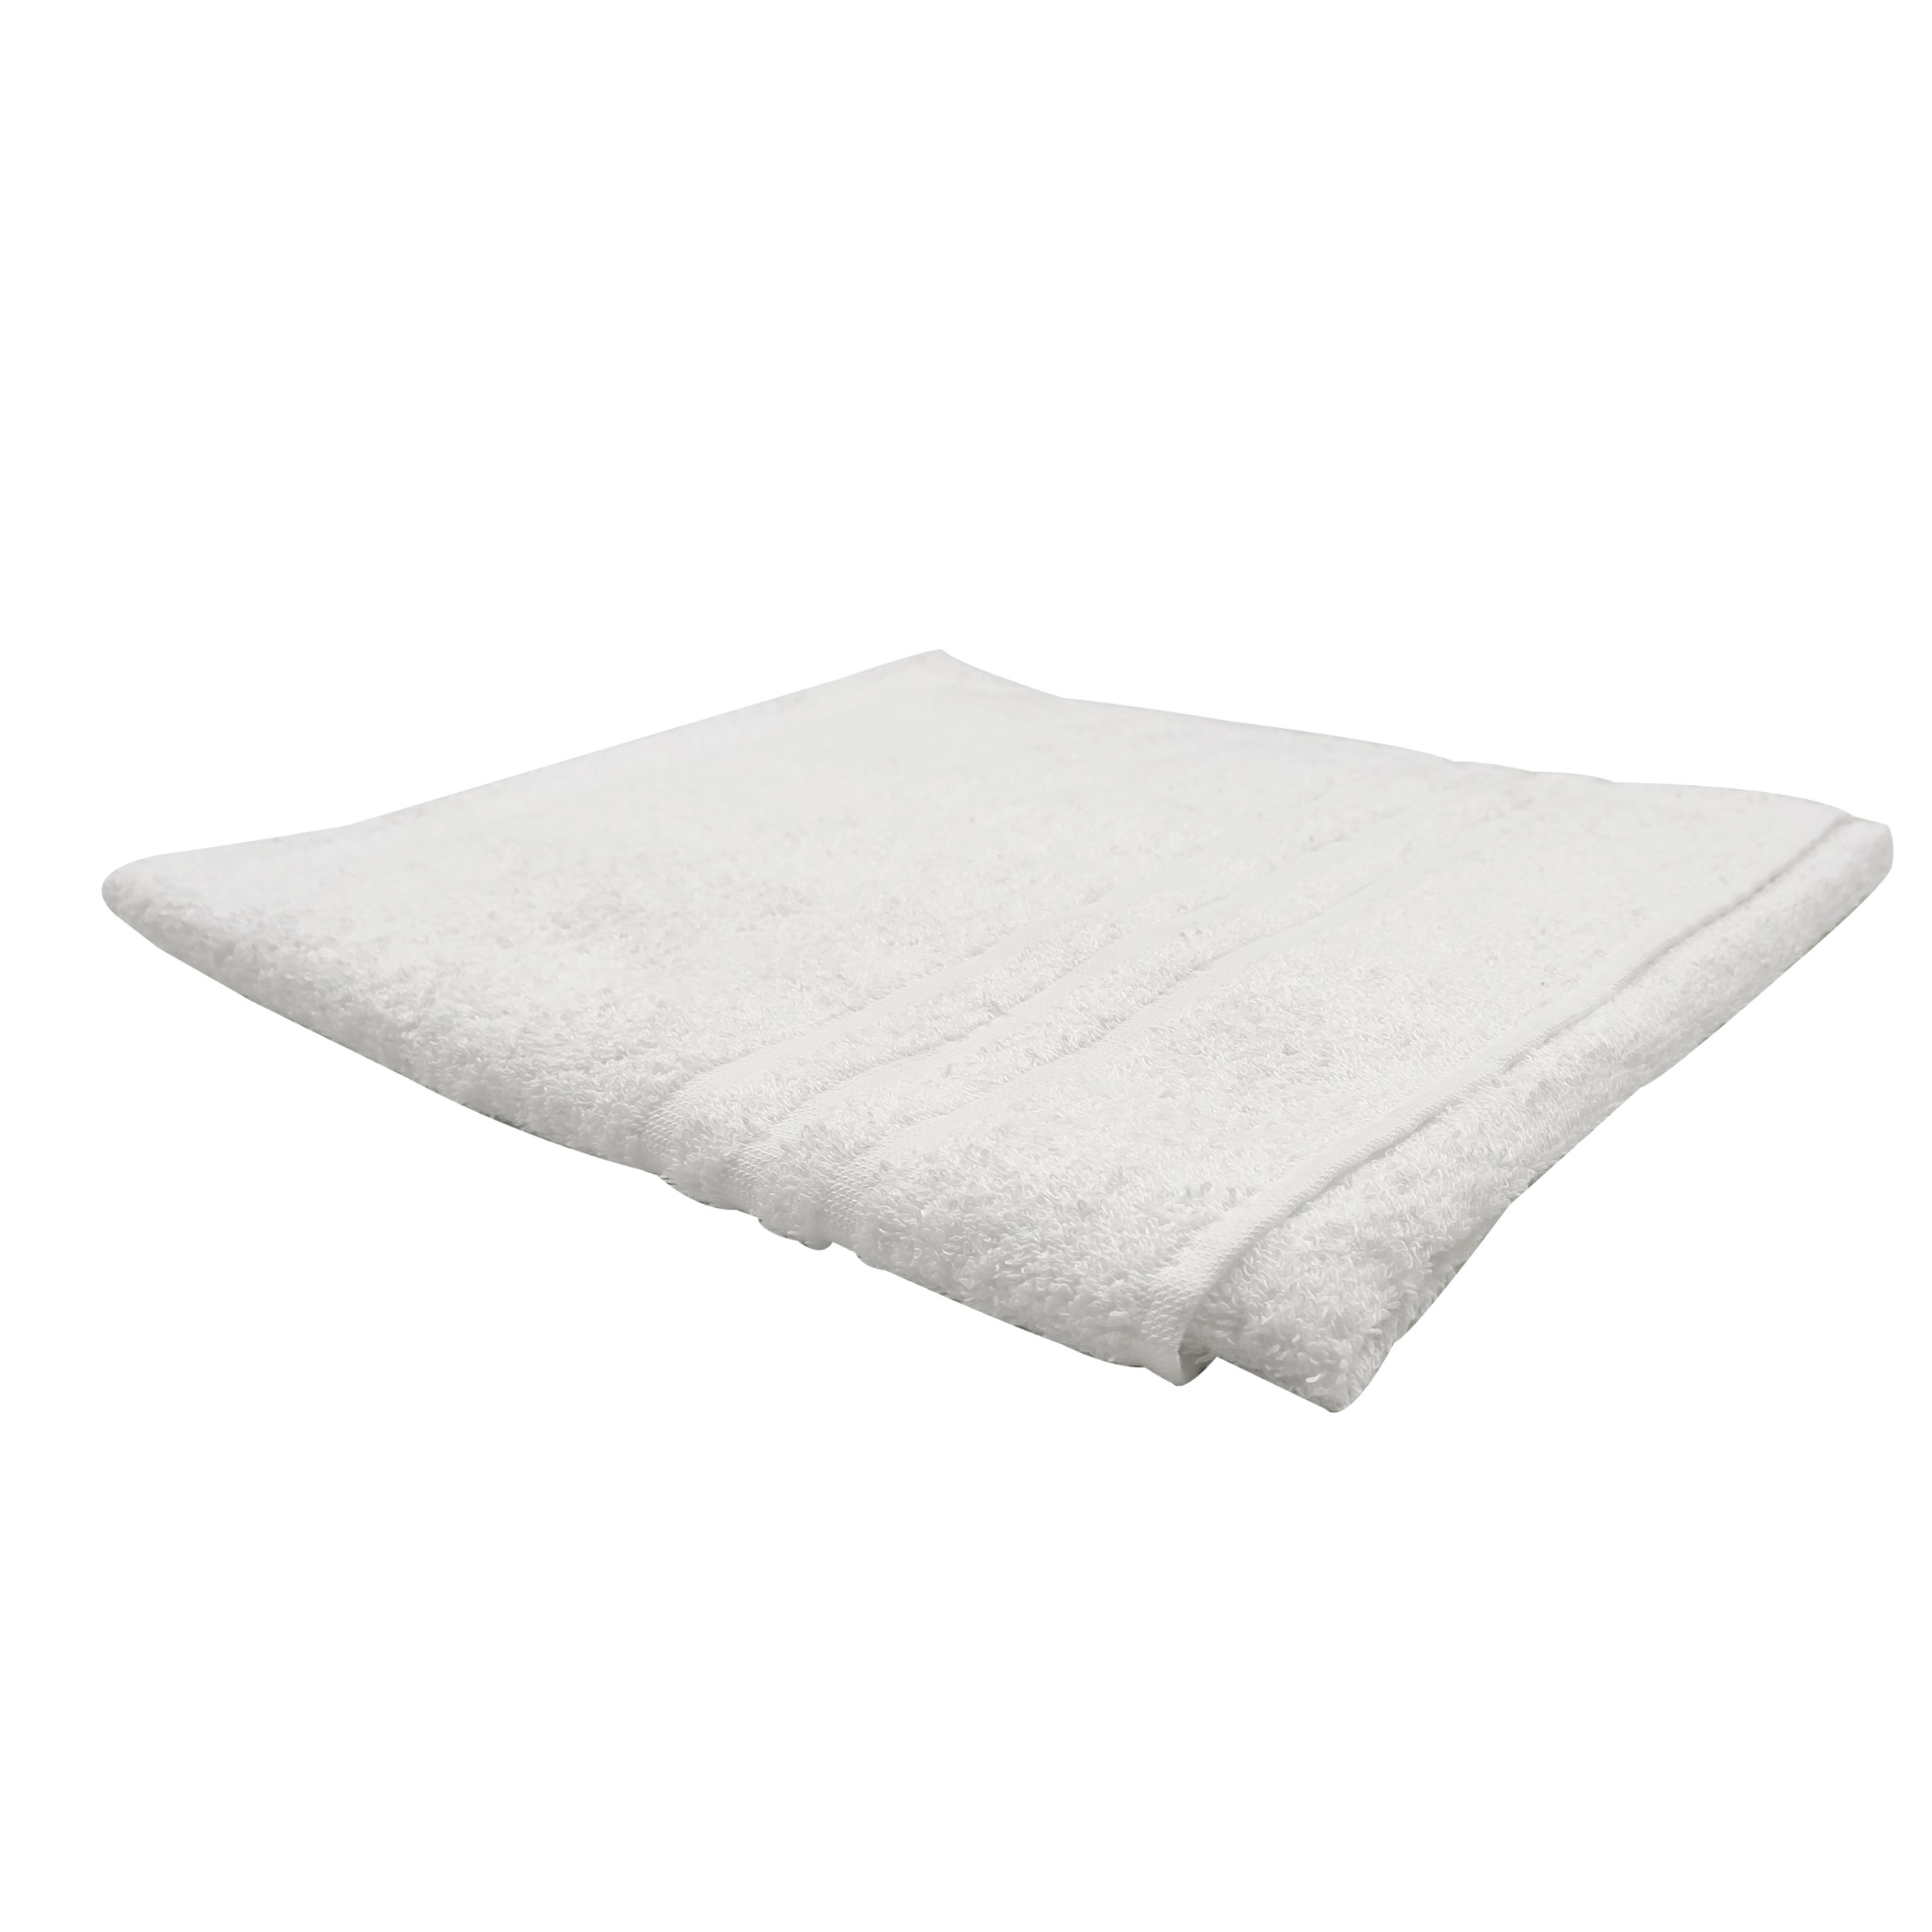 panini-tessuti-asciugamano-medio-colore-bianco